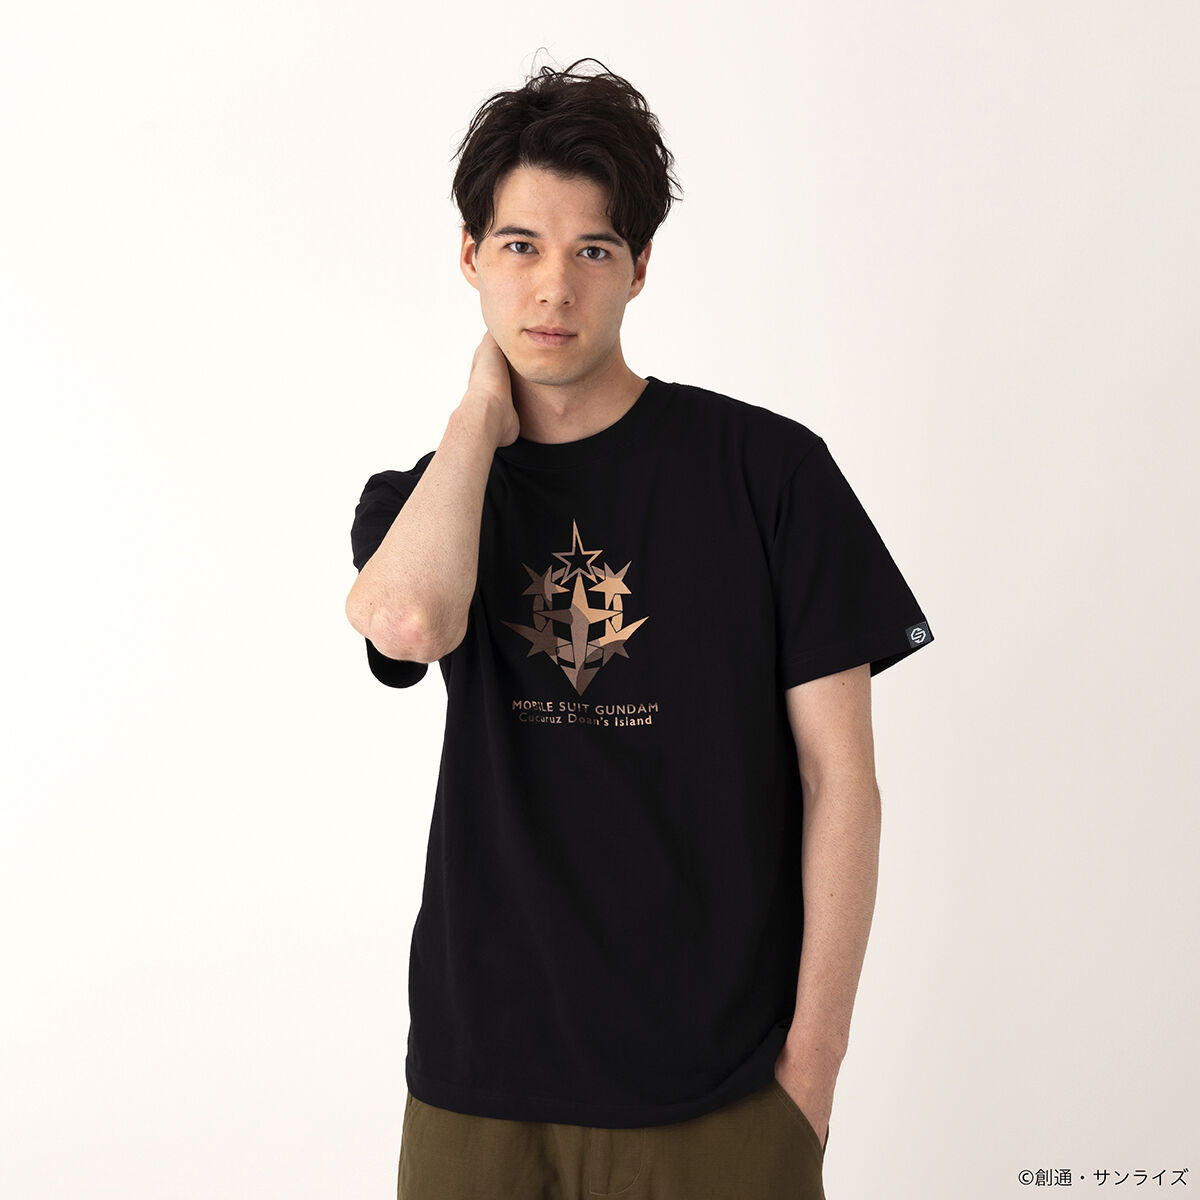 STRICT-G Mobile Suit Gundam Cucuruz: Doan's Island Southern Cross Corps T-Shirt